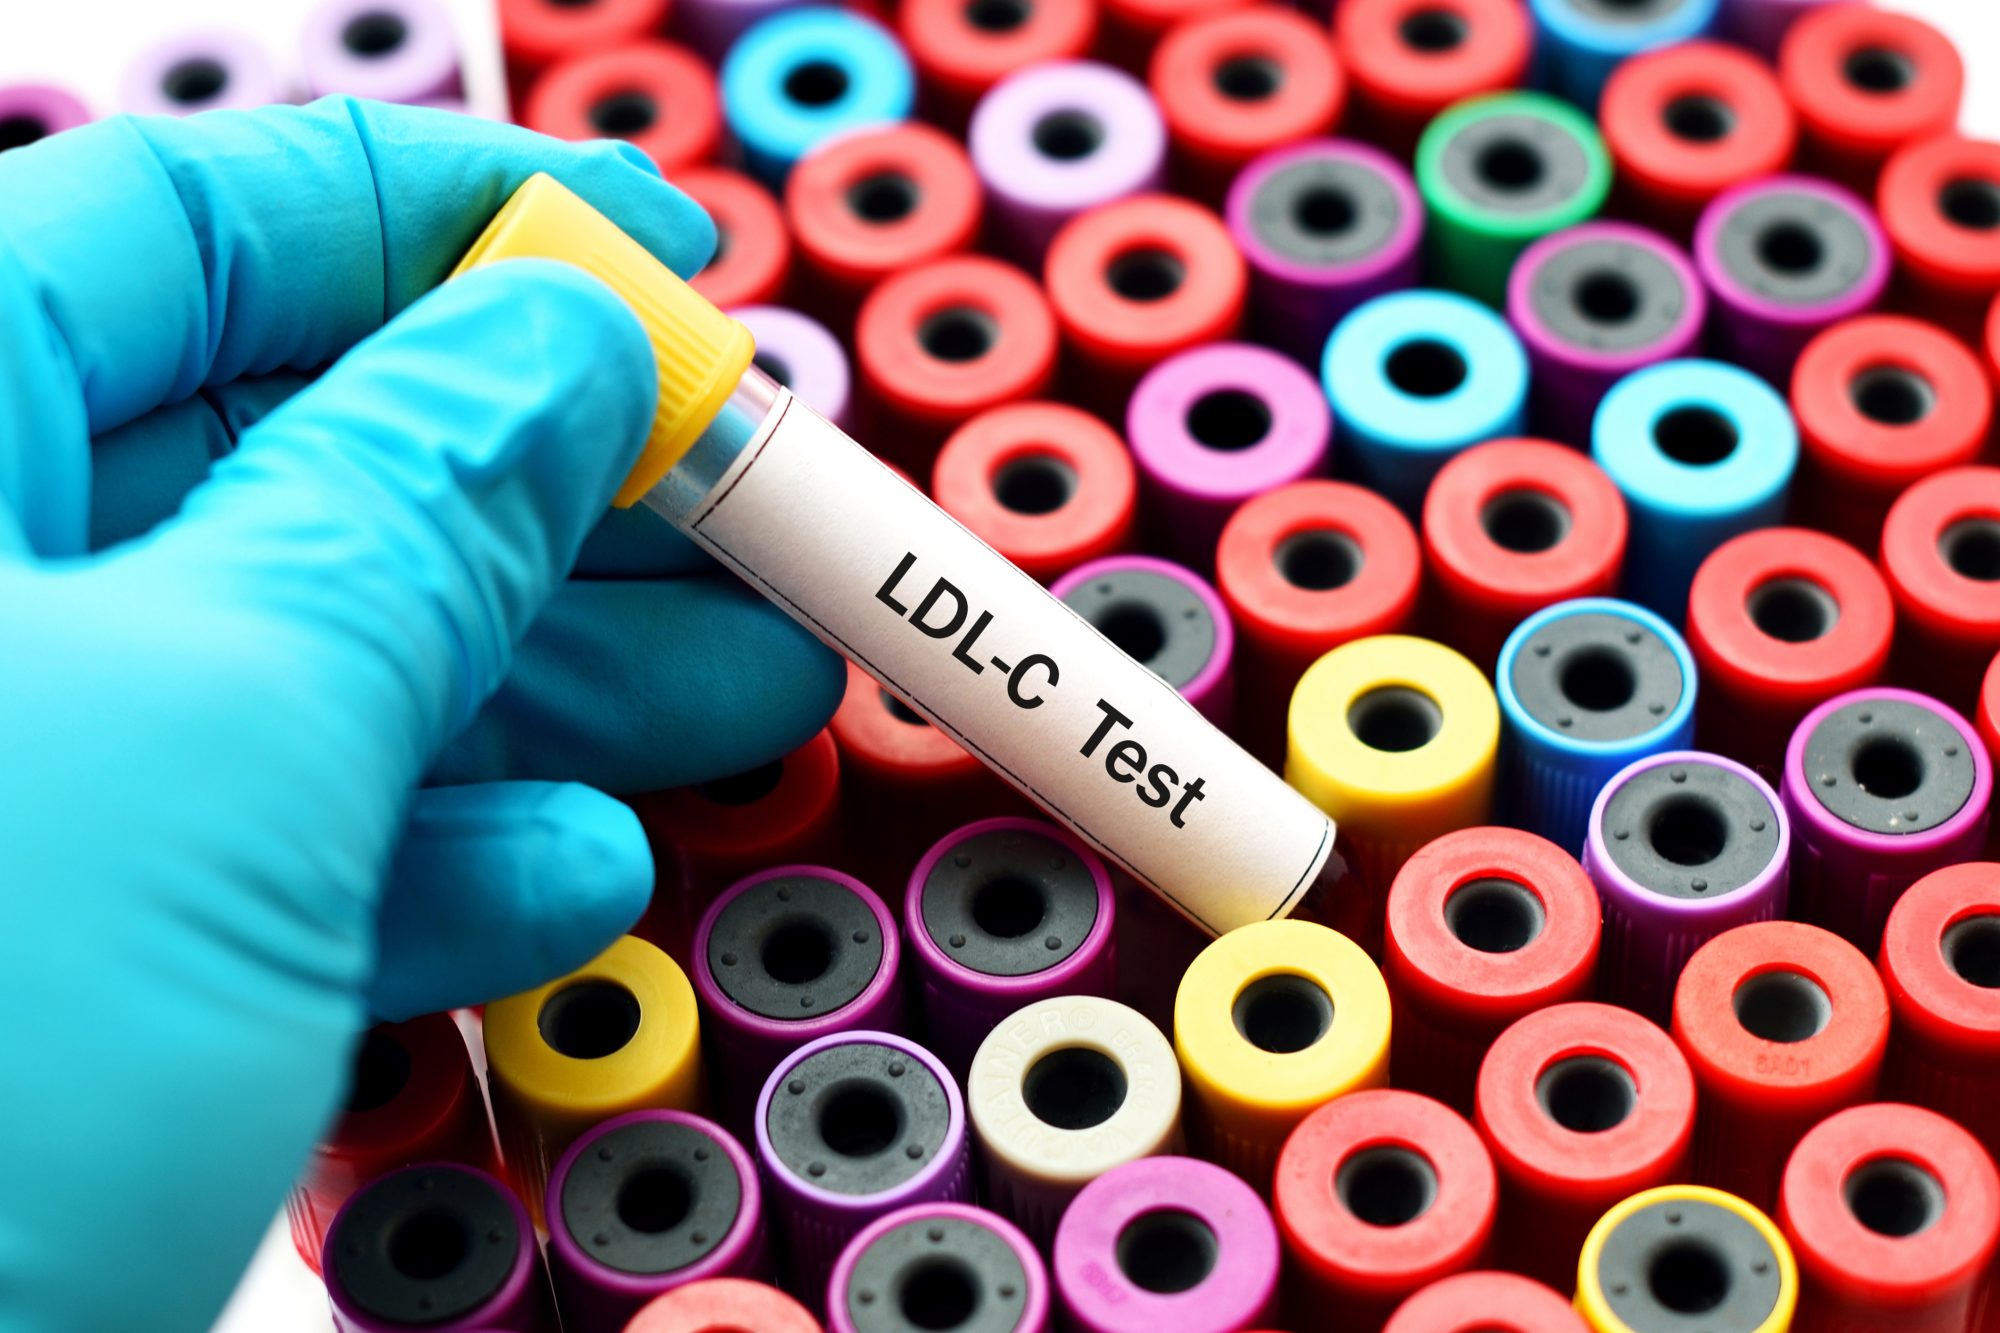 Blood for LDL cholesterol test